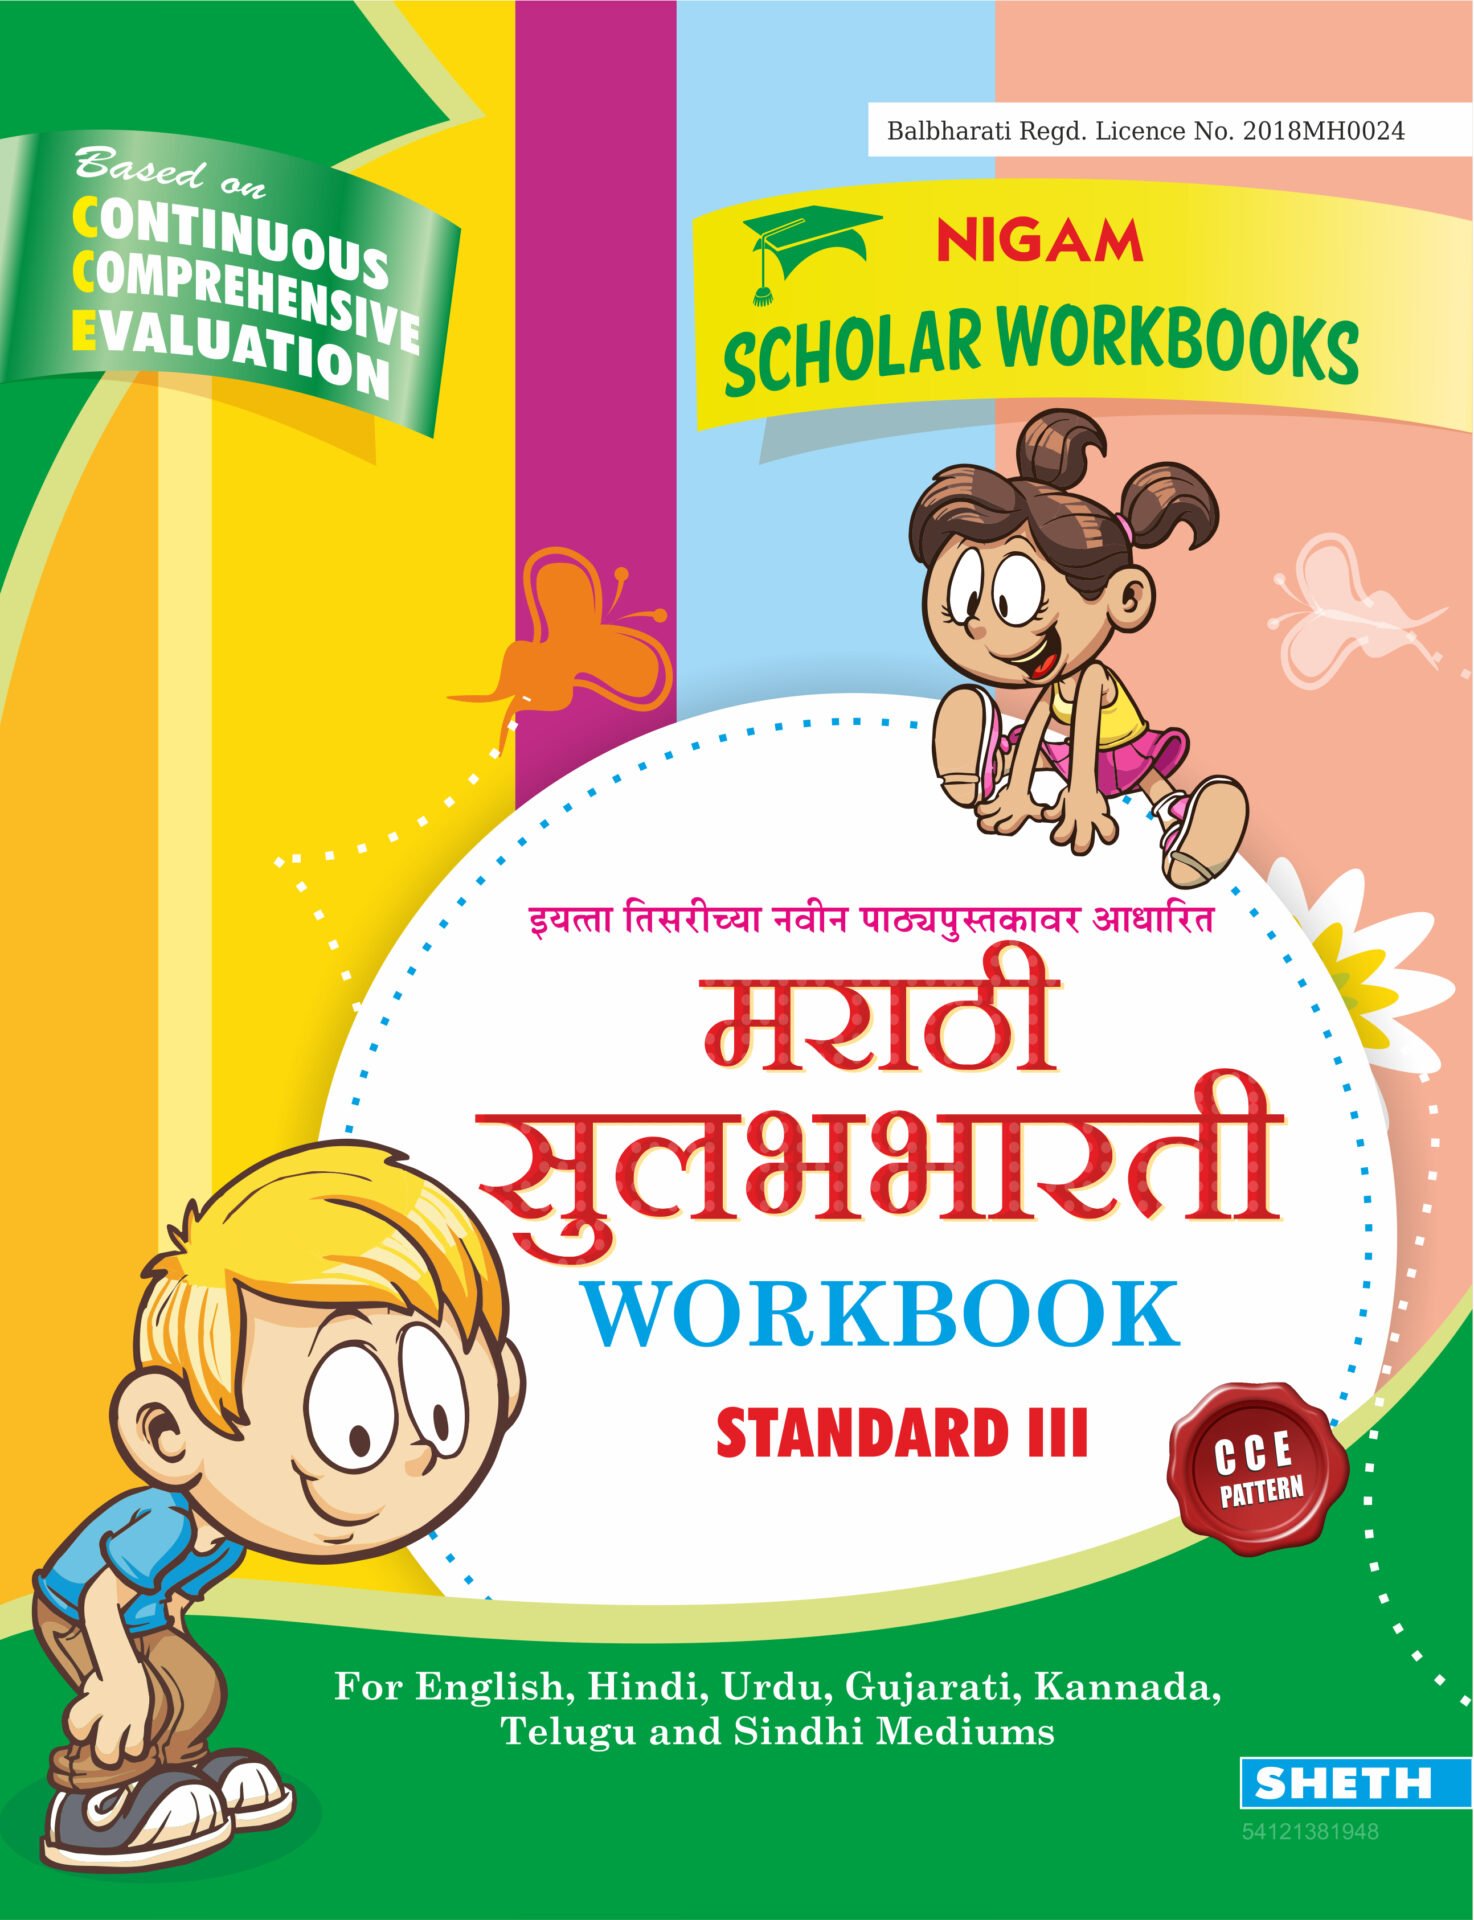 CCE Pattern Nigam Scholar Workbook Marathi Sulabhbharati Workbook Standard  - 3 (Maharashtra State Board Syllabus Books) - Shethbooks | Official Buy  Page of SHETH Publishing House